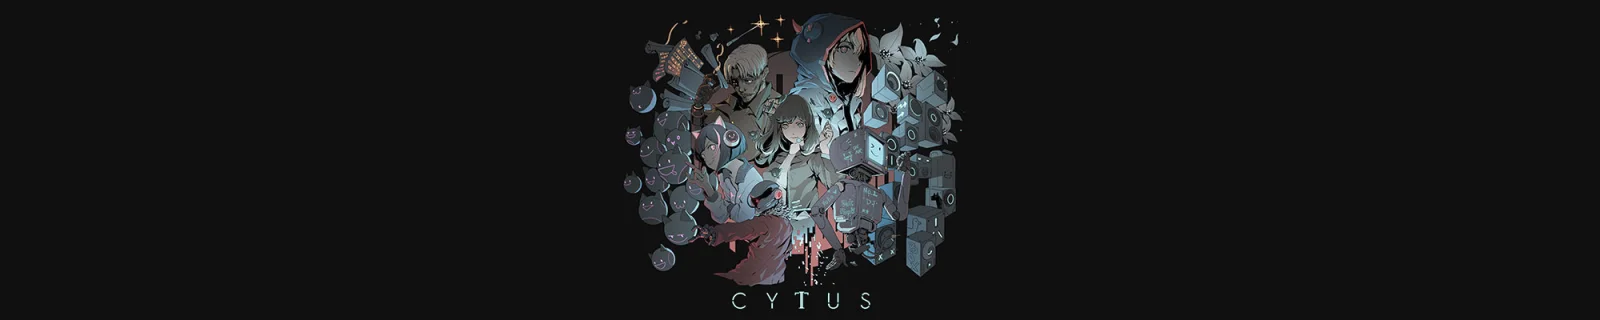 《Cytus II》将于18日上架iOS